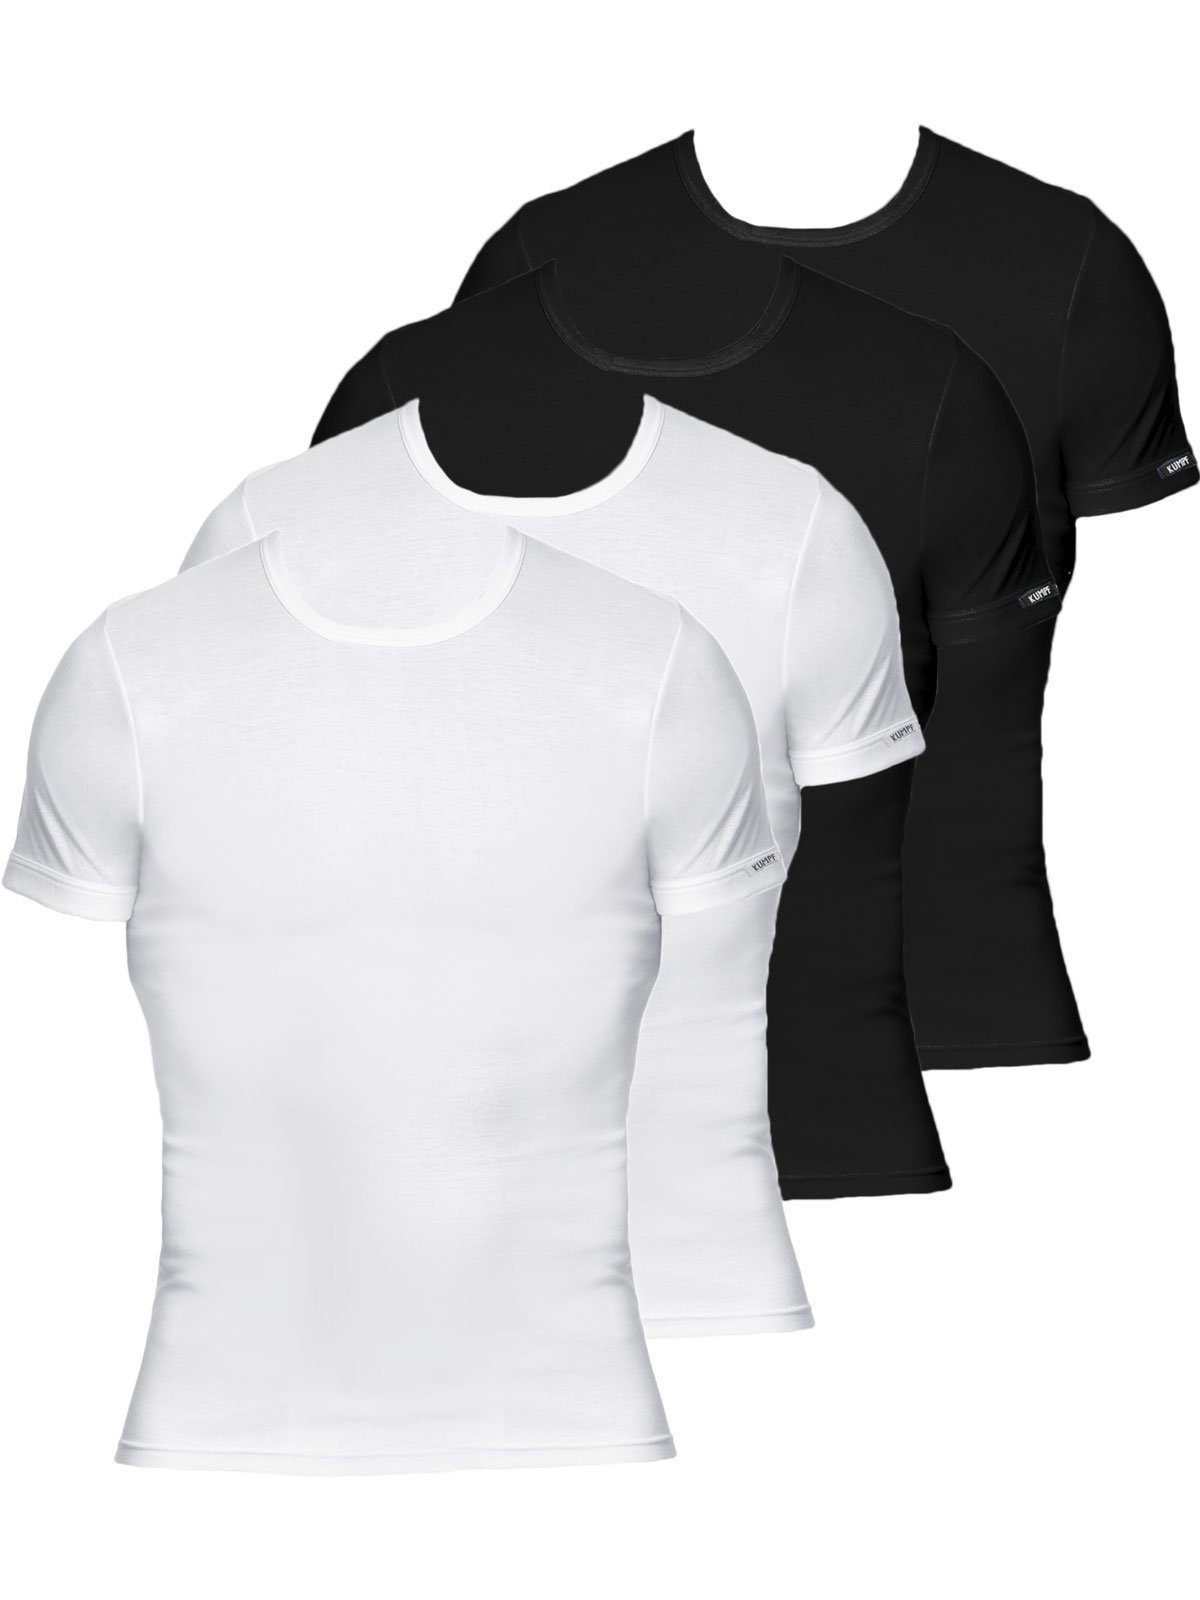 KUMPF Unterziehshirt 4er Sparpack Herren T-Shirt Bio Cotton (Spar-Set, 4-St) hohe Markenqualität schwarz weiss